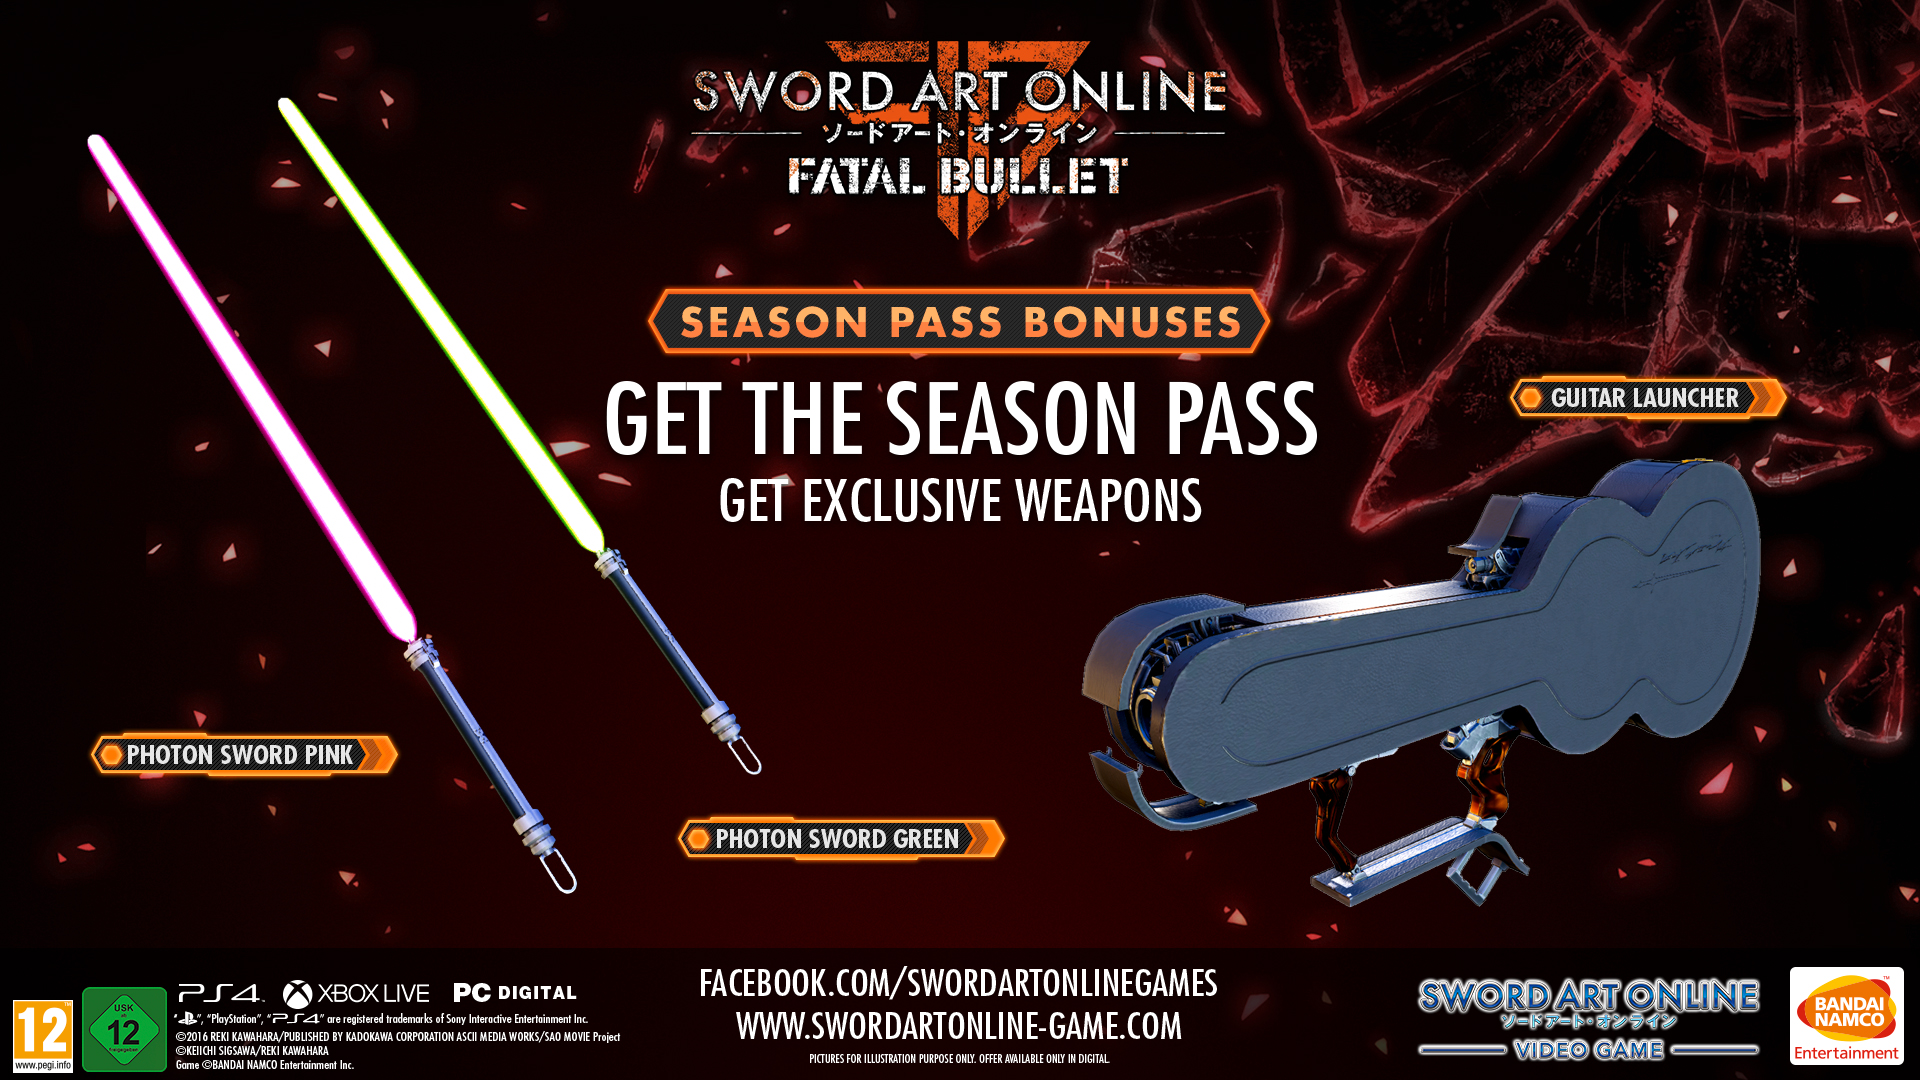 Sword Art Online Re: Hollow Fragment Gets PC Release as Fatal Bullet  Pre-Order Bonus - News - Anime News Network